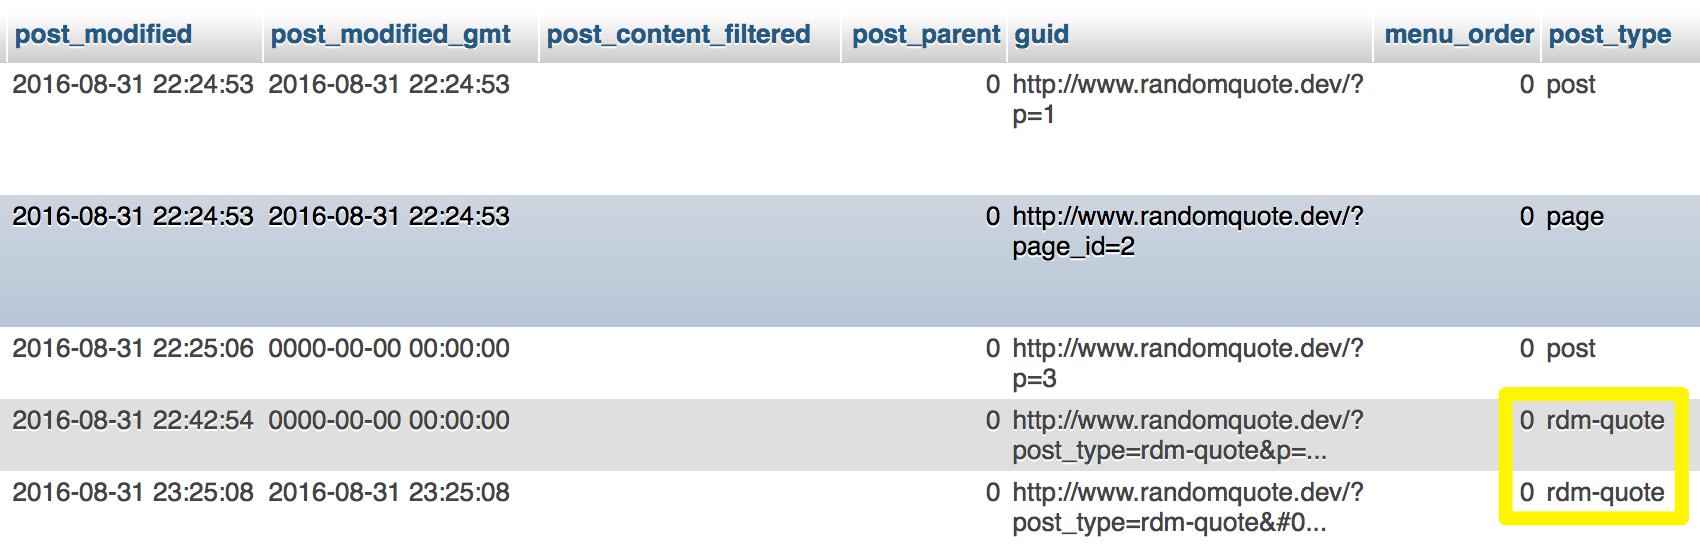 Custom post types in database.